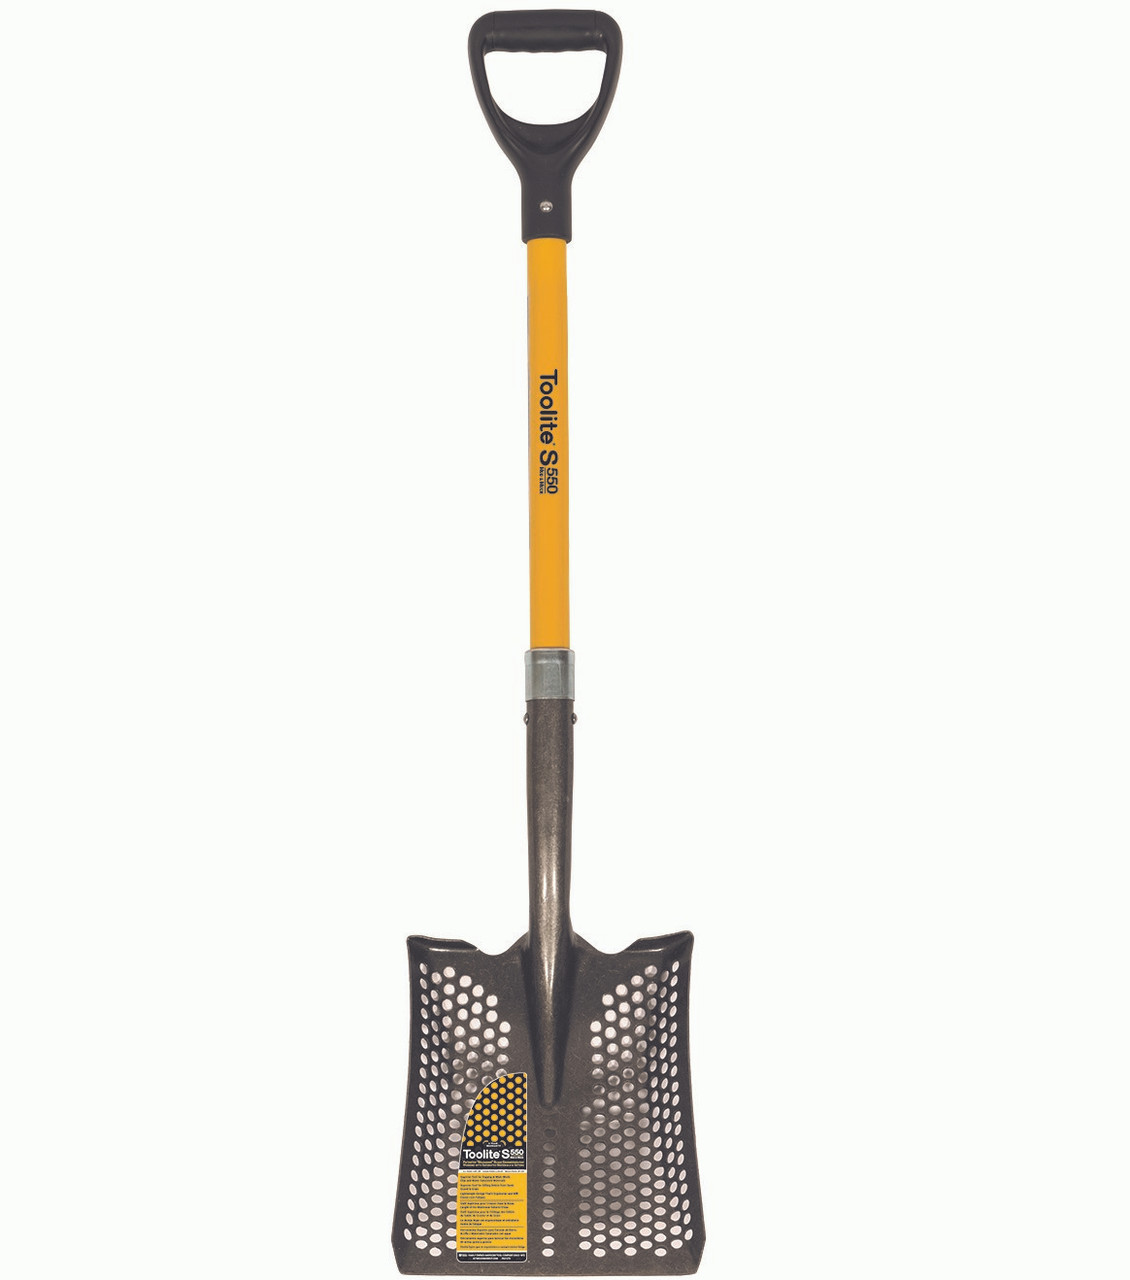 Seymour Midwest Mud & Muck Toolite #2 Square Point Shovel, 29" Yellow Fiberglass D-Grip Handle 49503